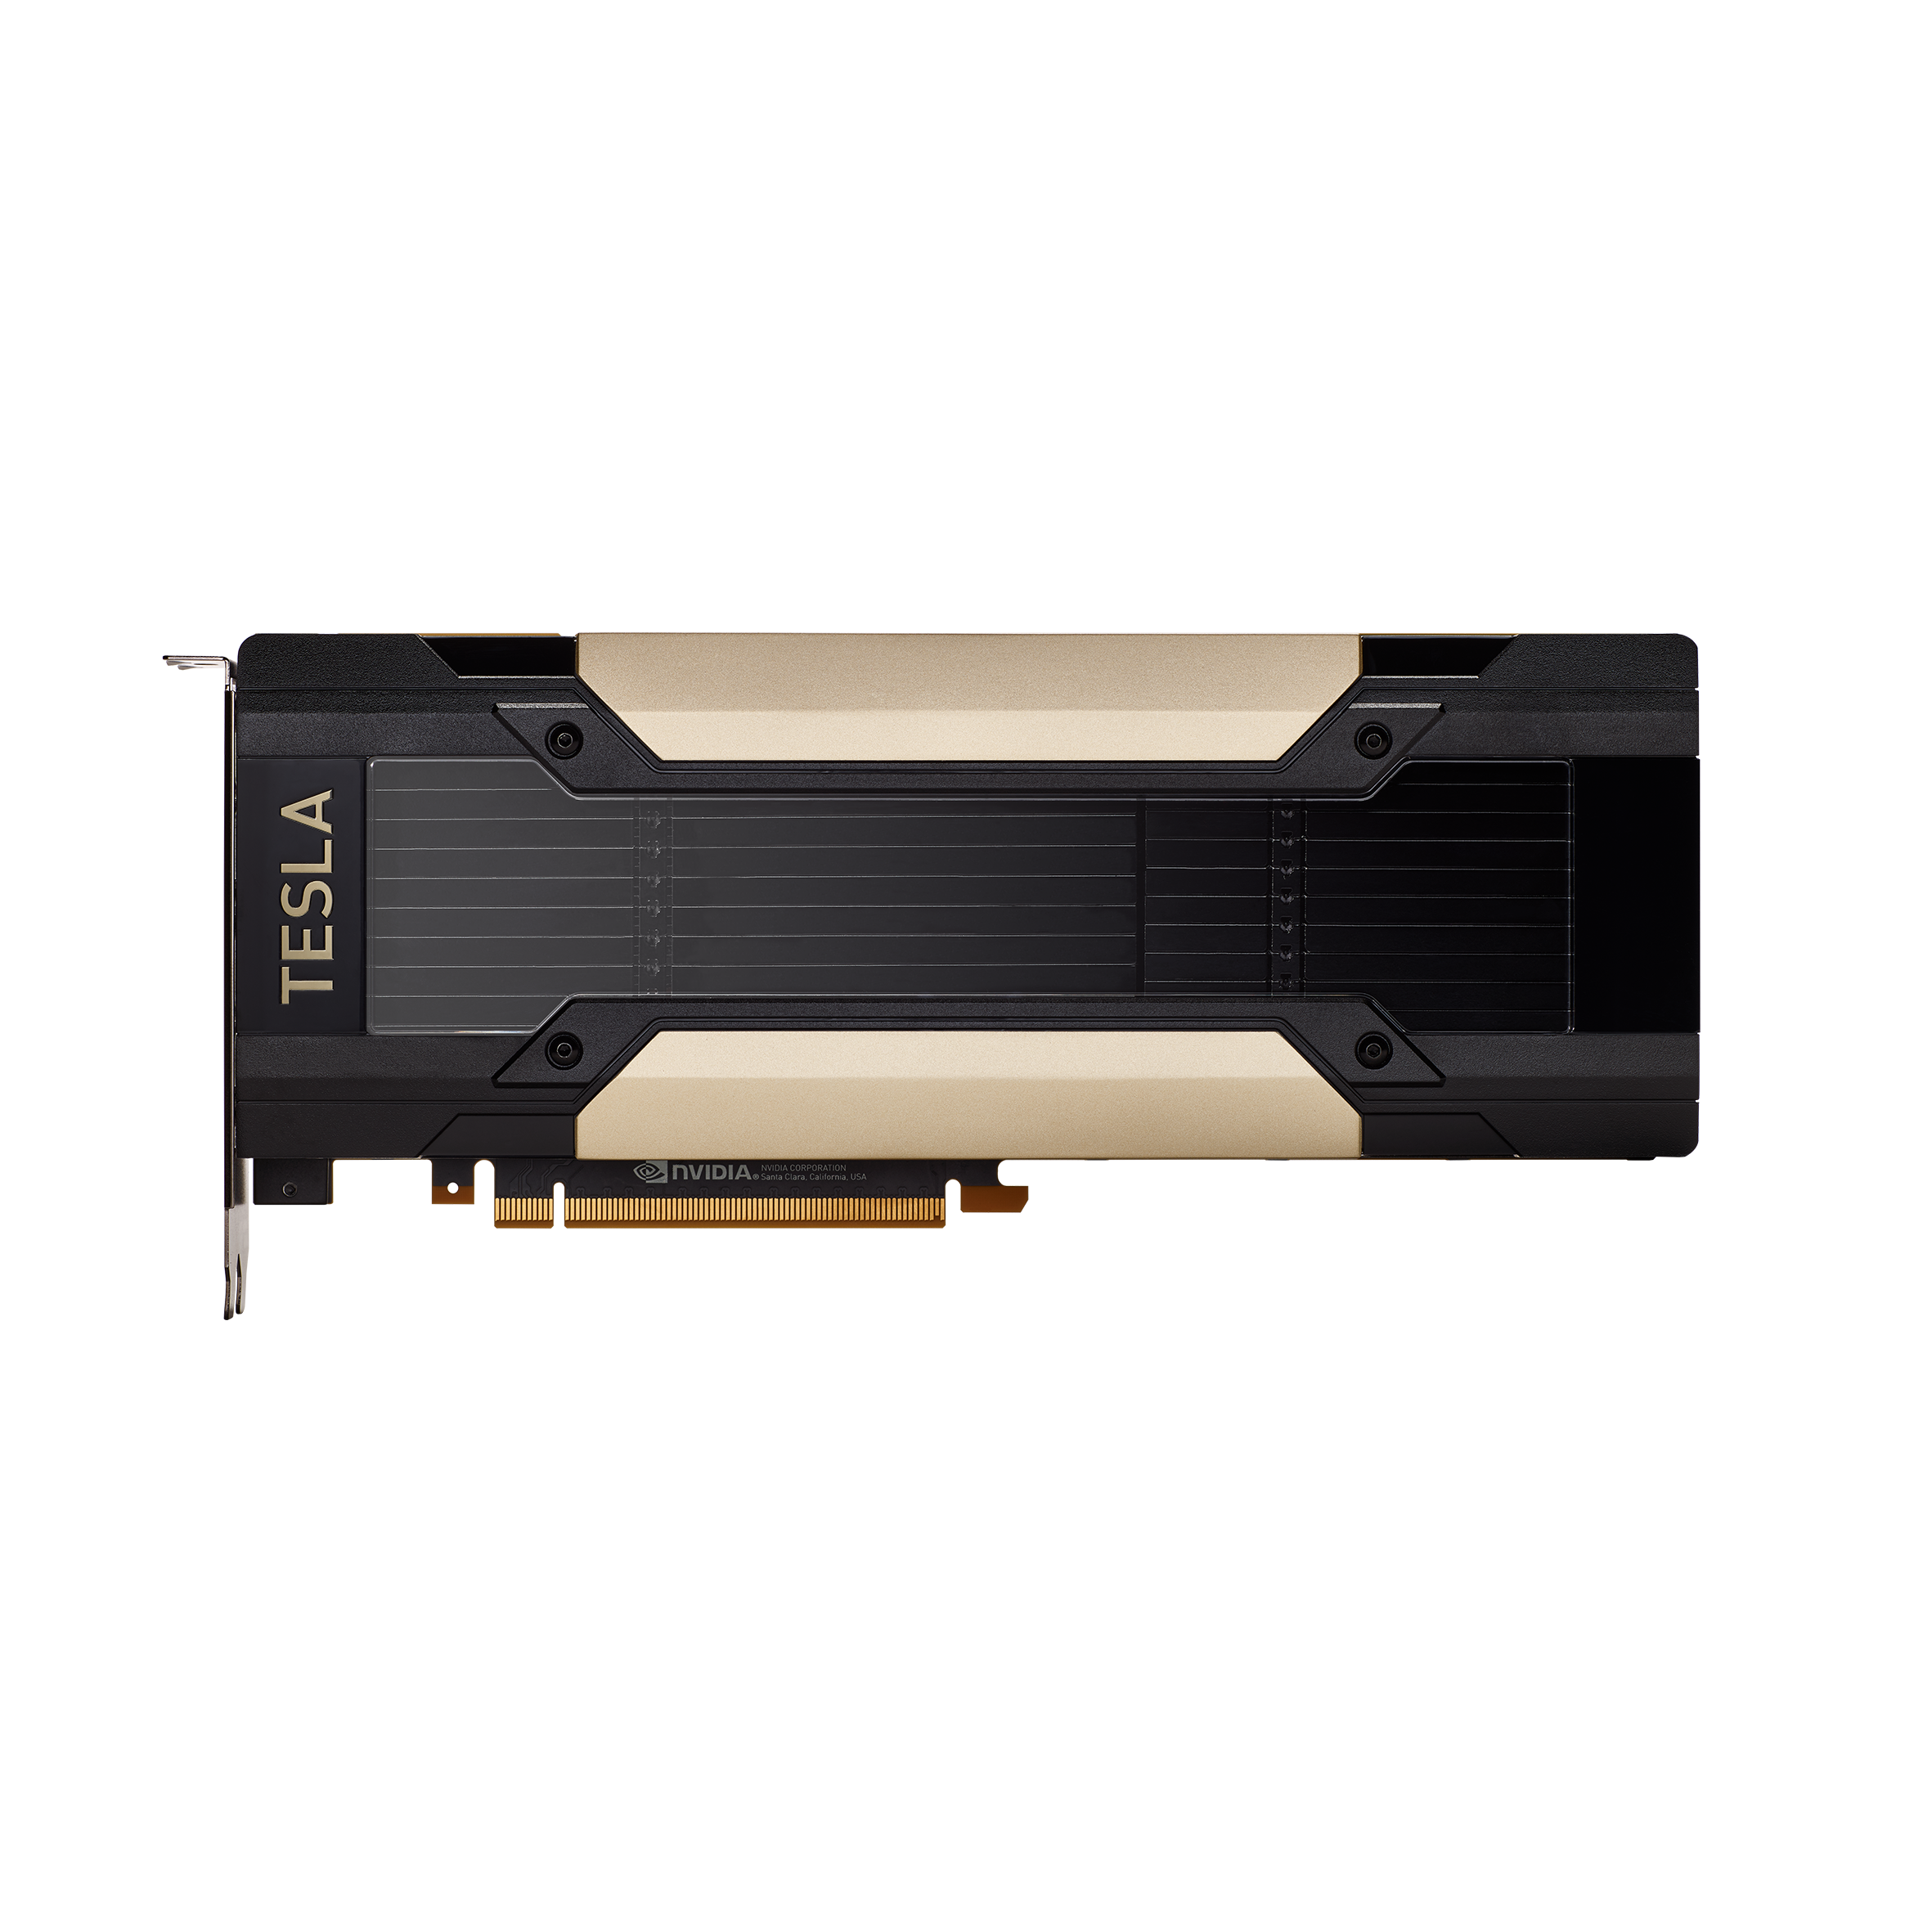 NVIDIA V100S Tensor Core GPU